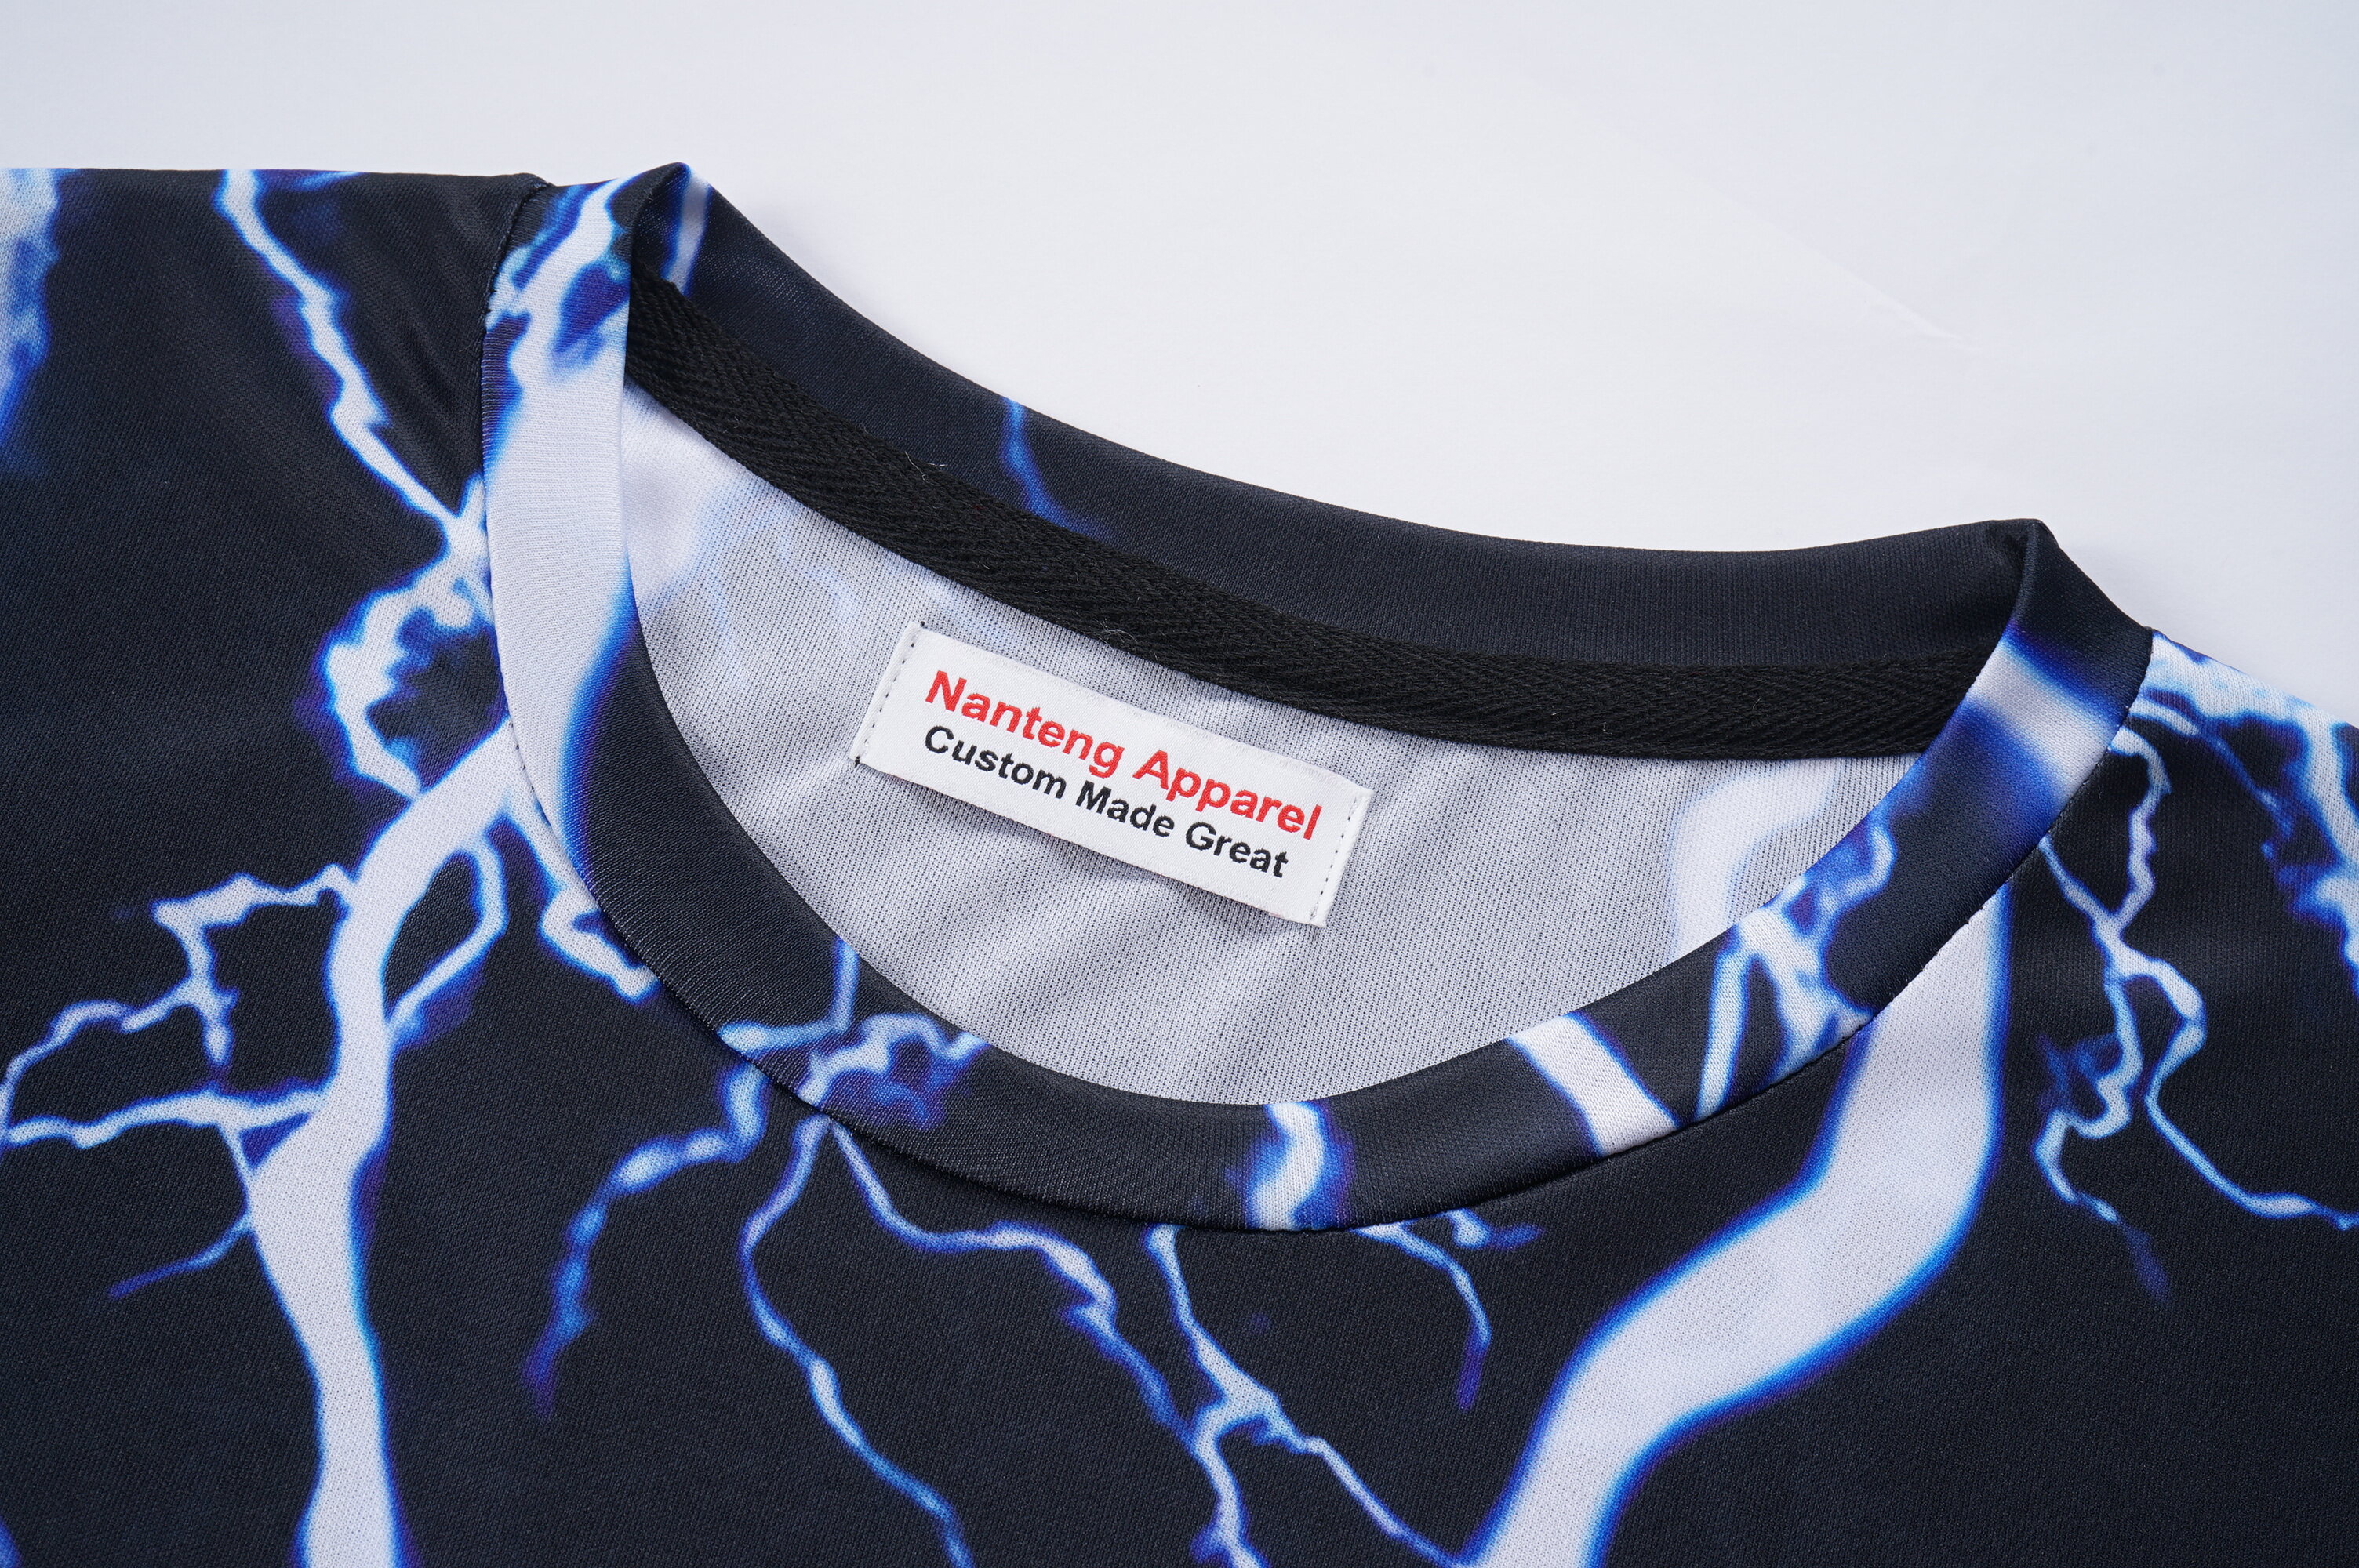 Custom T-Shirt, Polyester Breathable Sublimation 3D T-Shirt, Lightning Pattern T-Shirt, Crew Neck Pullover T-Shirt